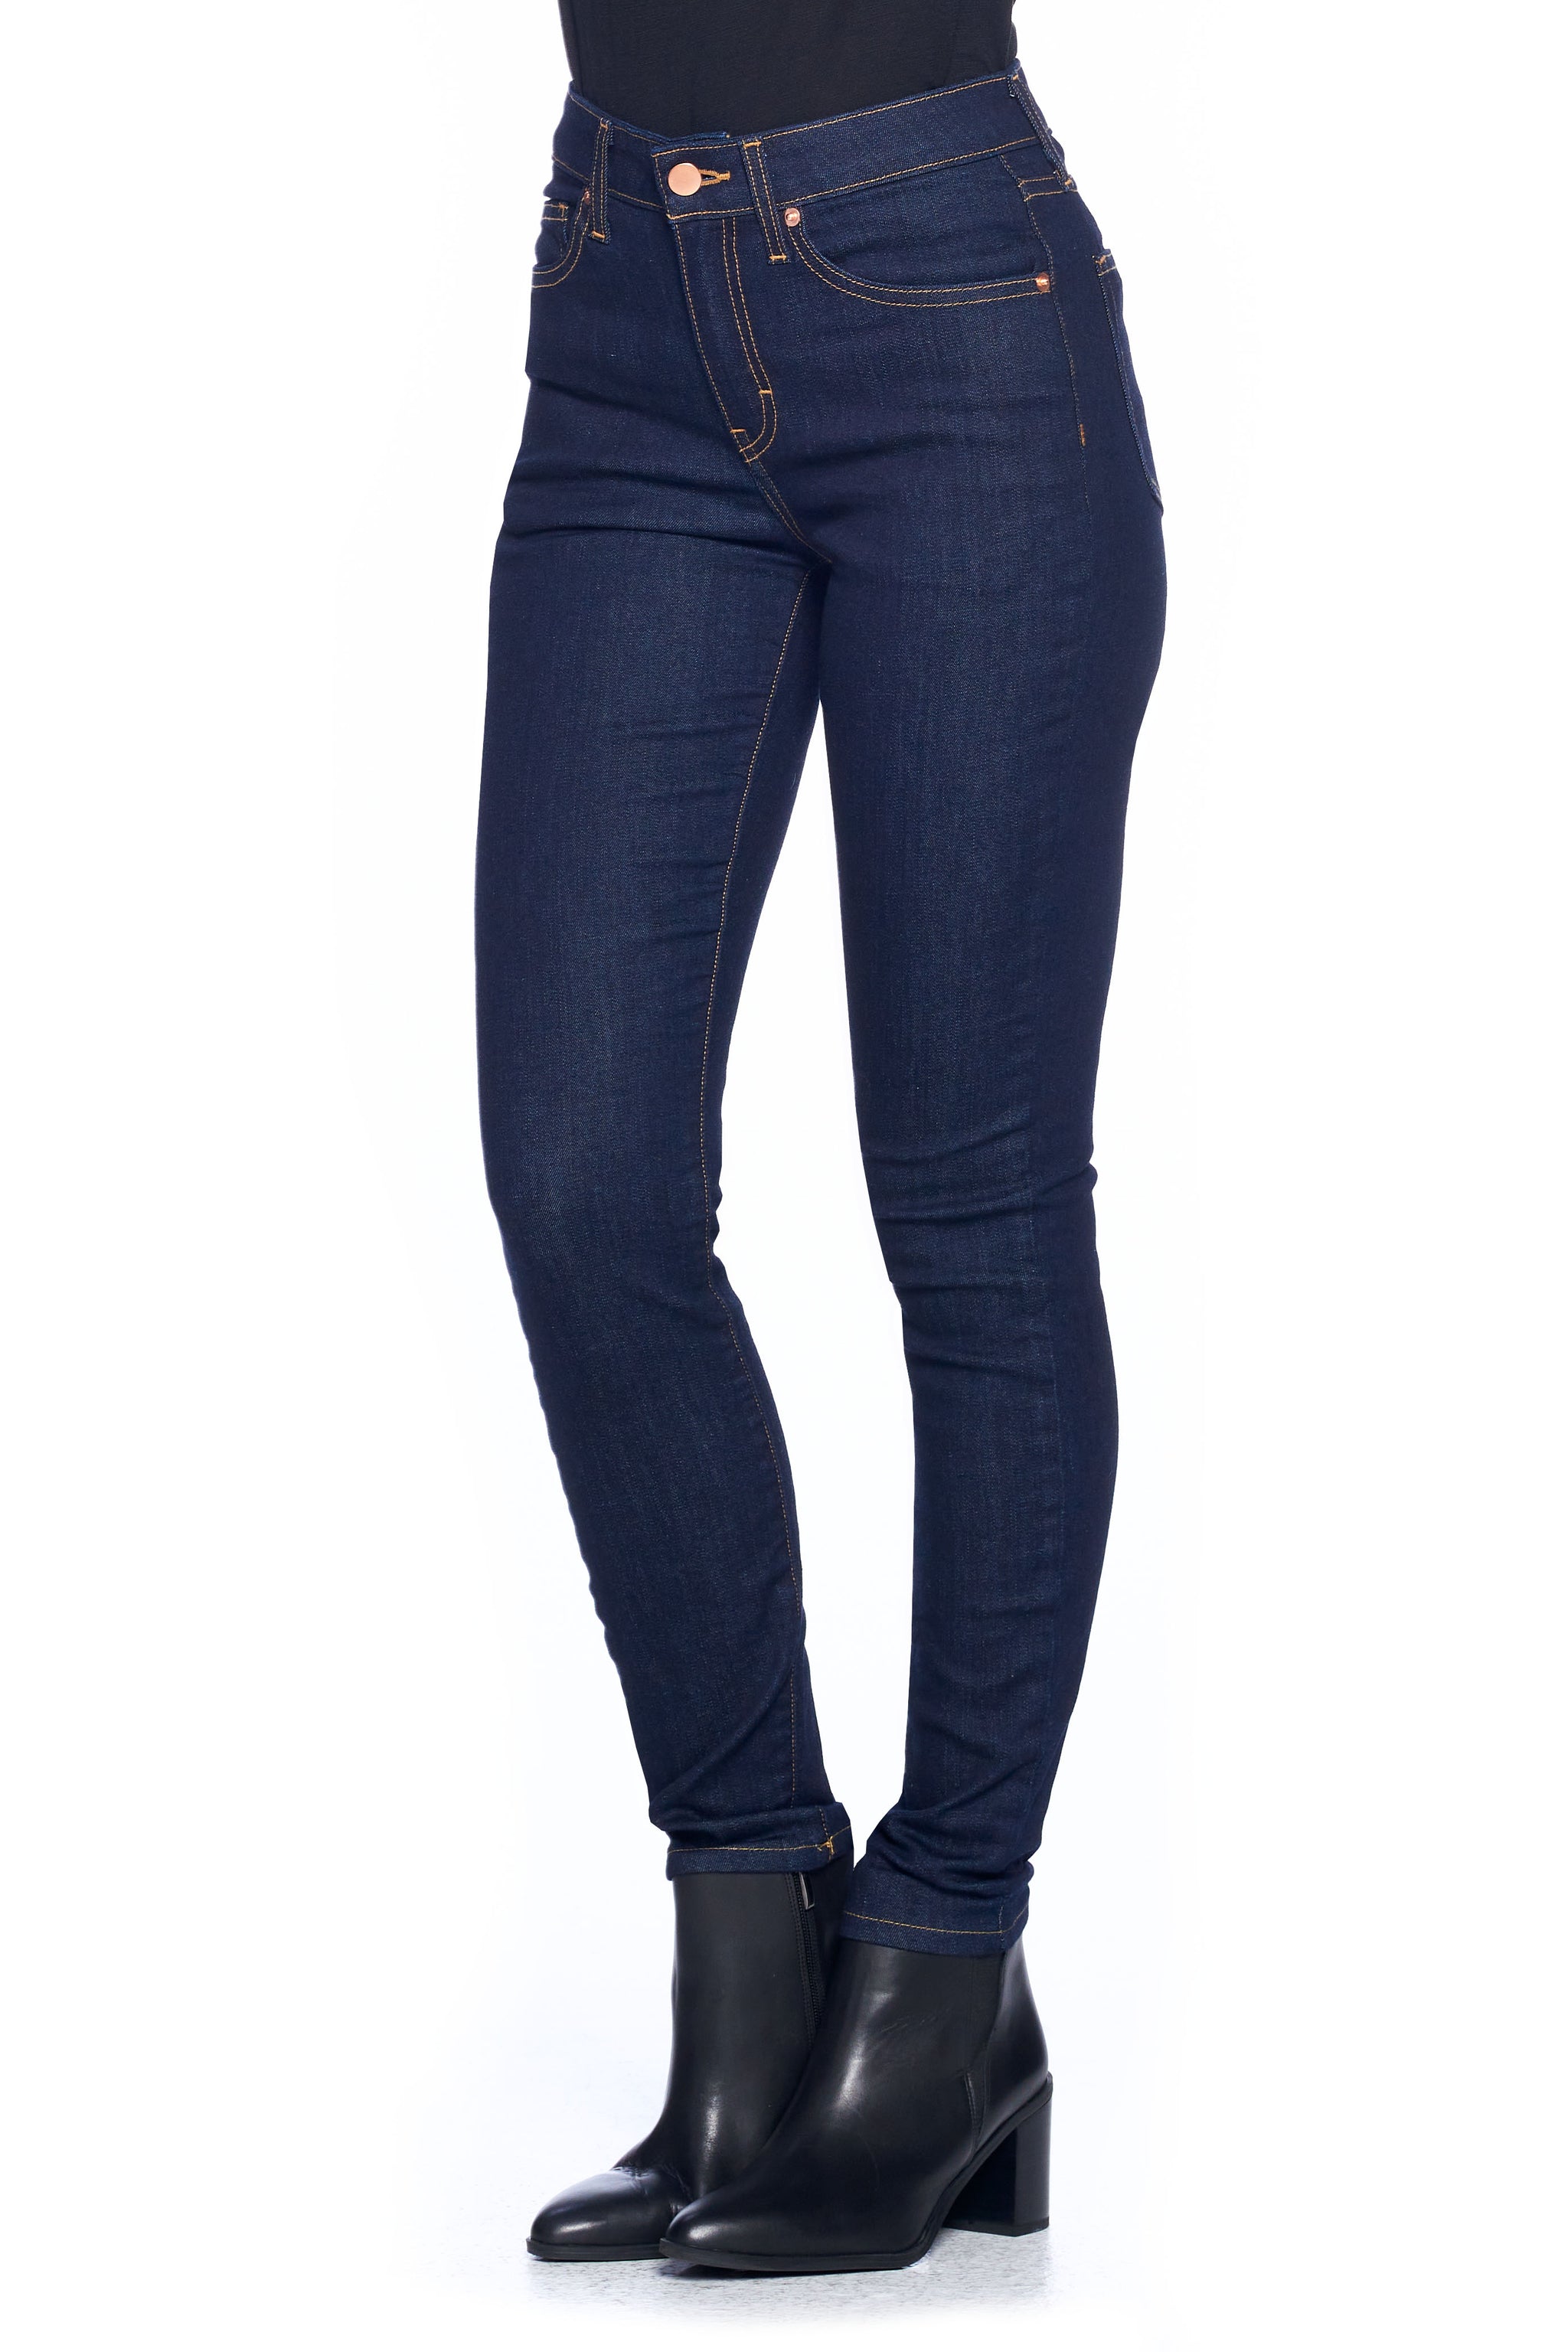 dark indigo skinny jeans womens